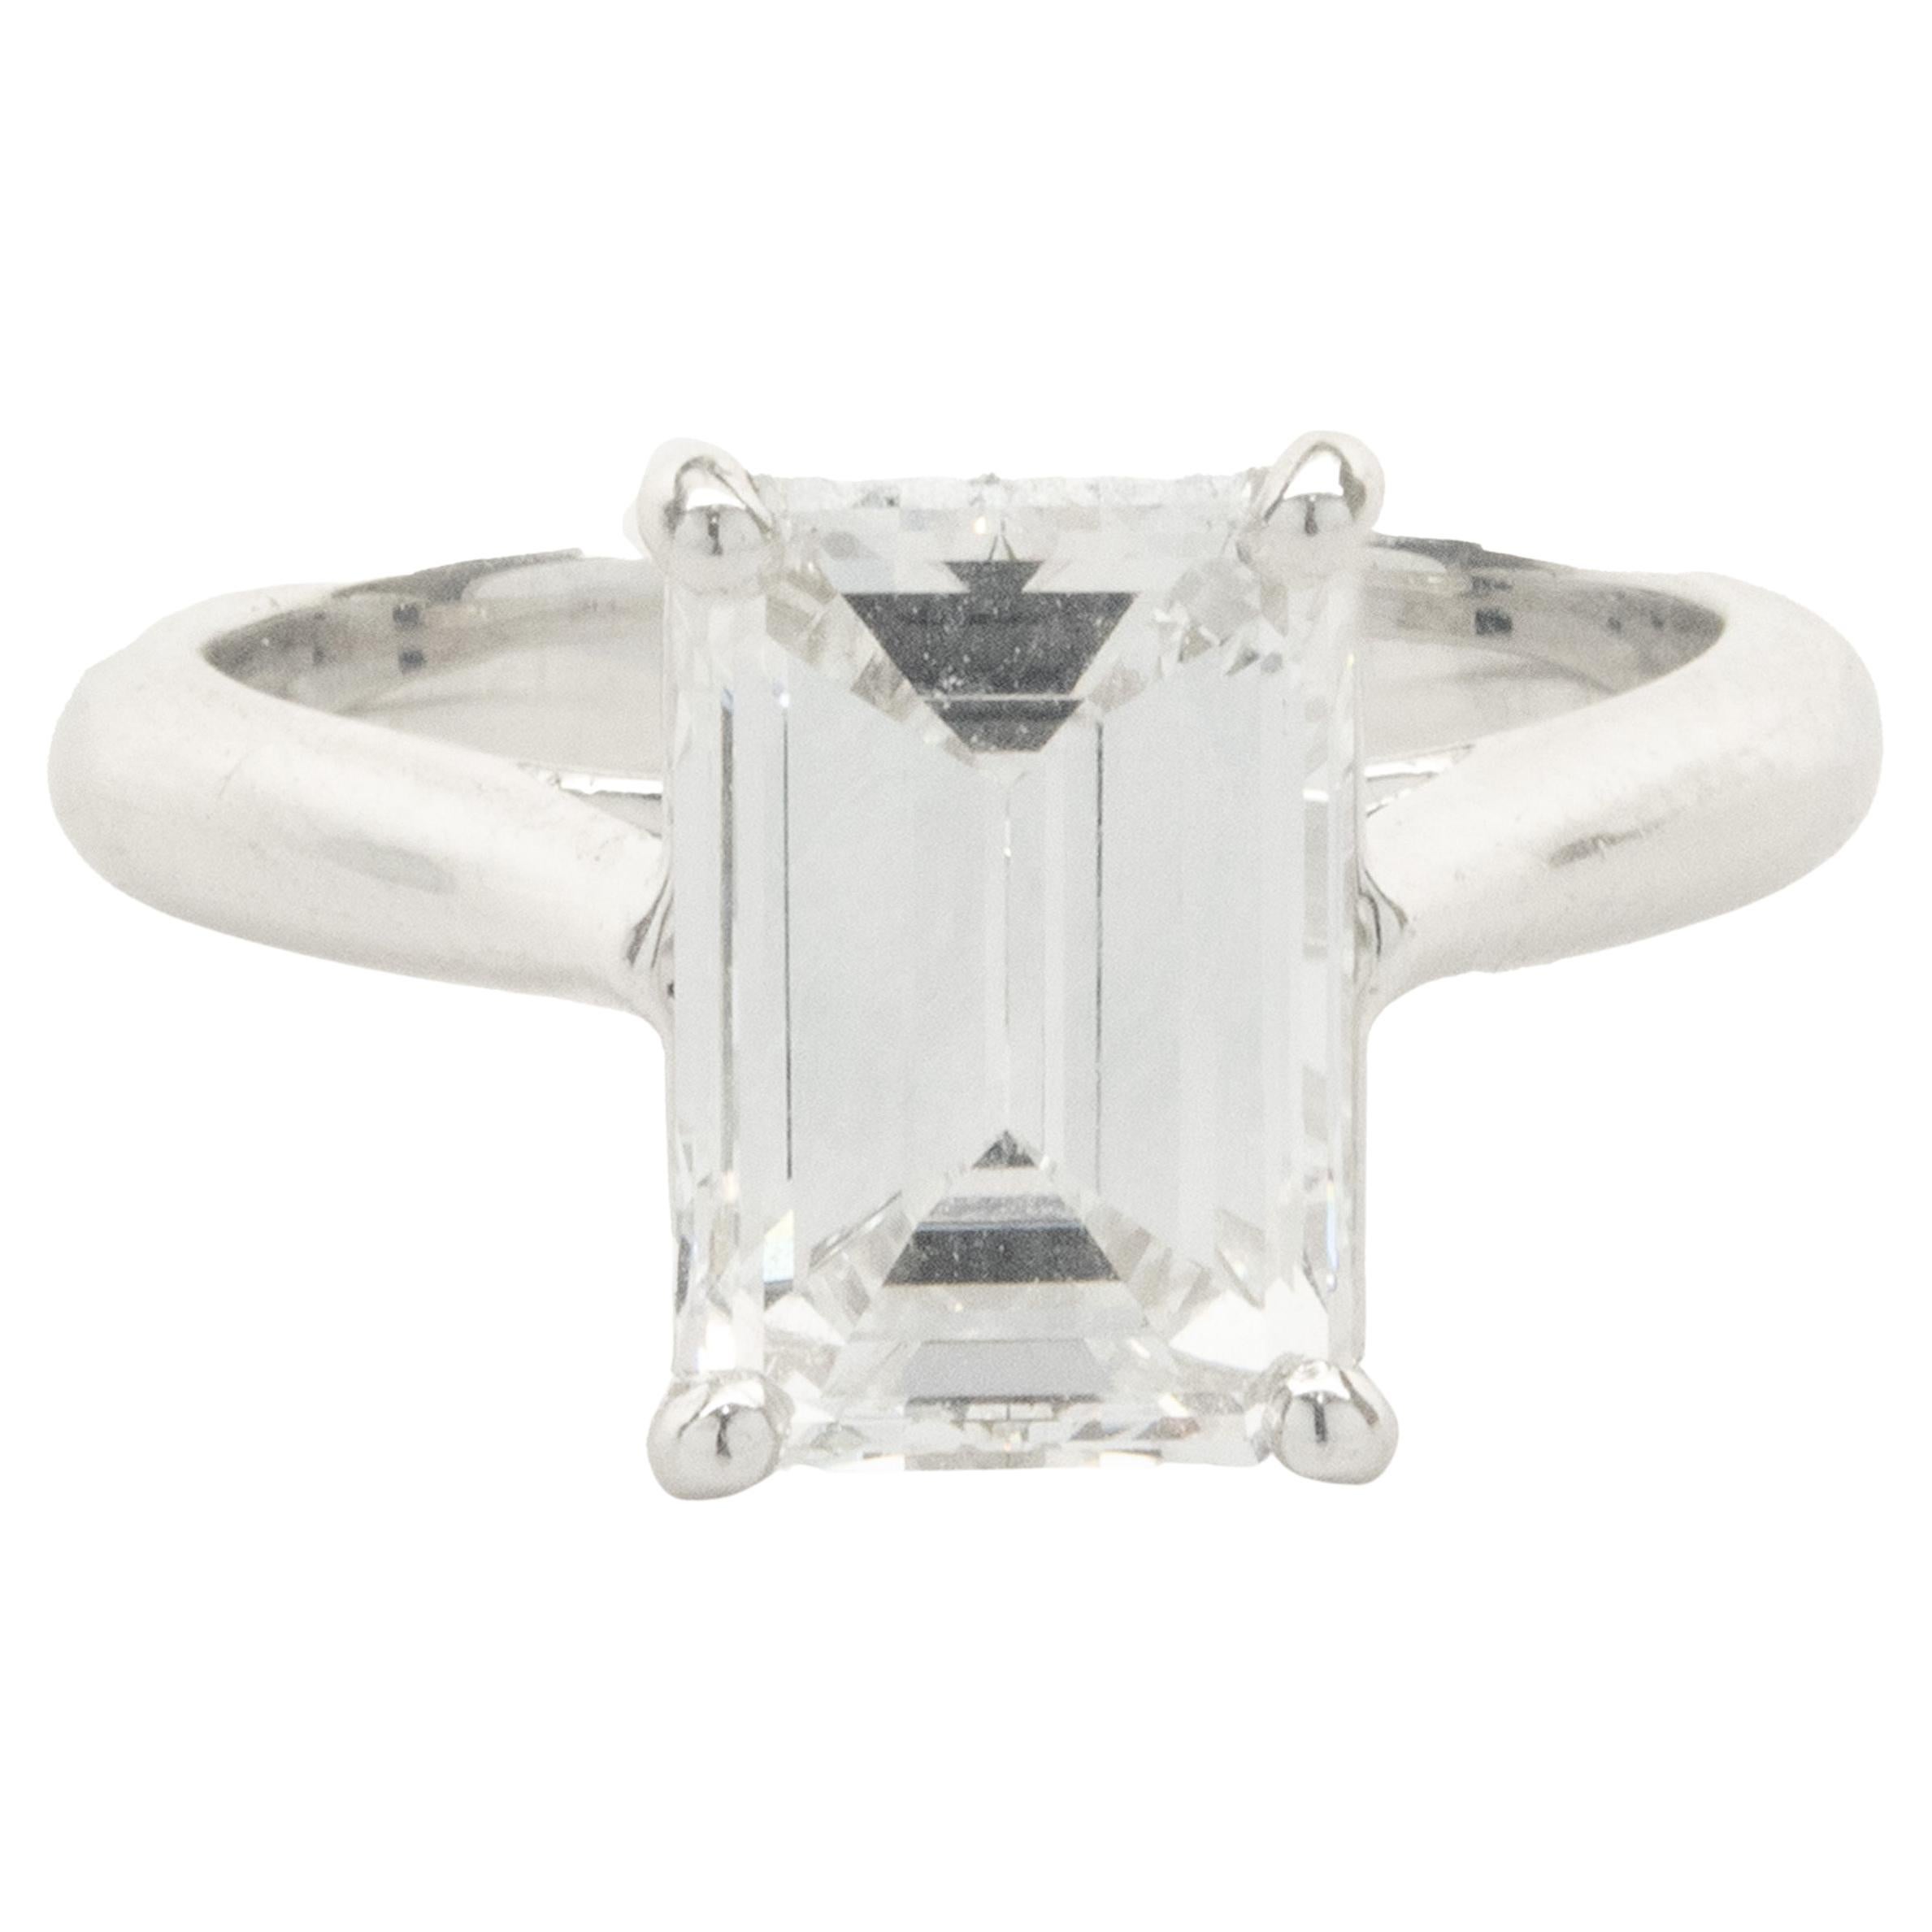 Platinum Emerald Cut Diamond Engagement Ring For Sale